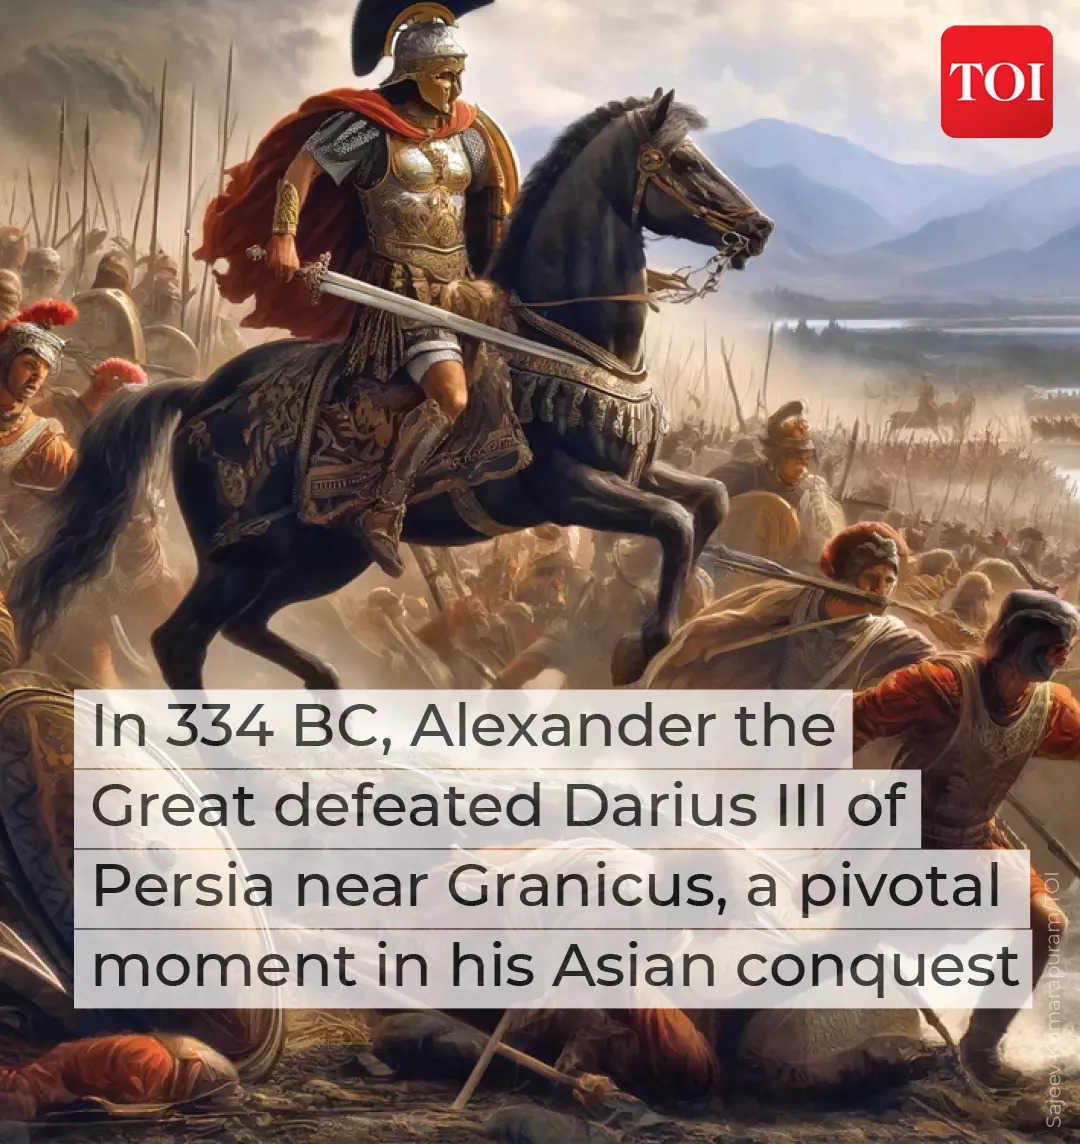 7. Alexander's biggest battle